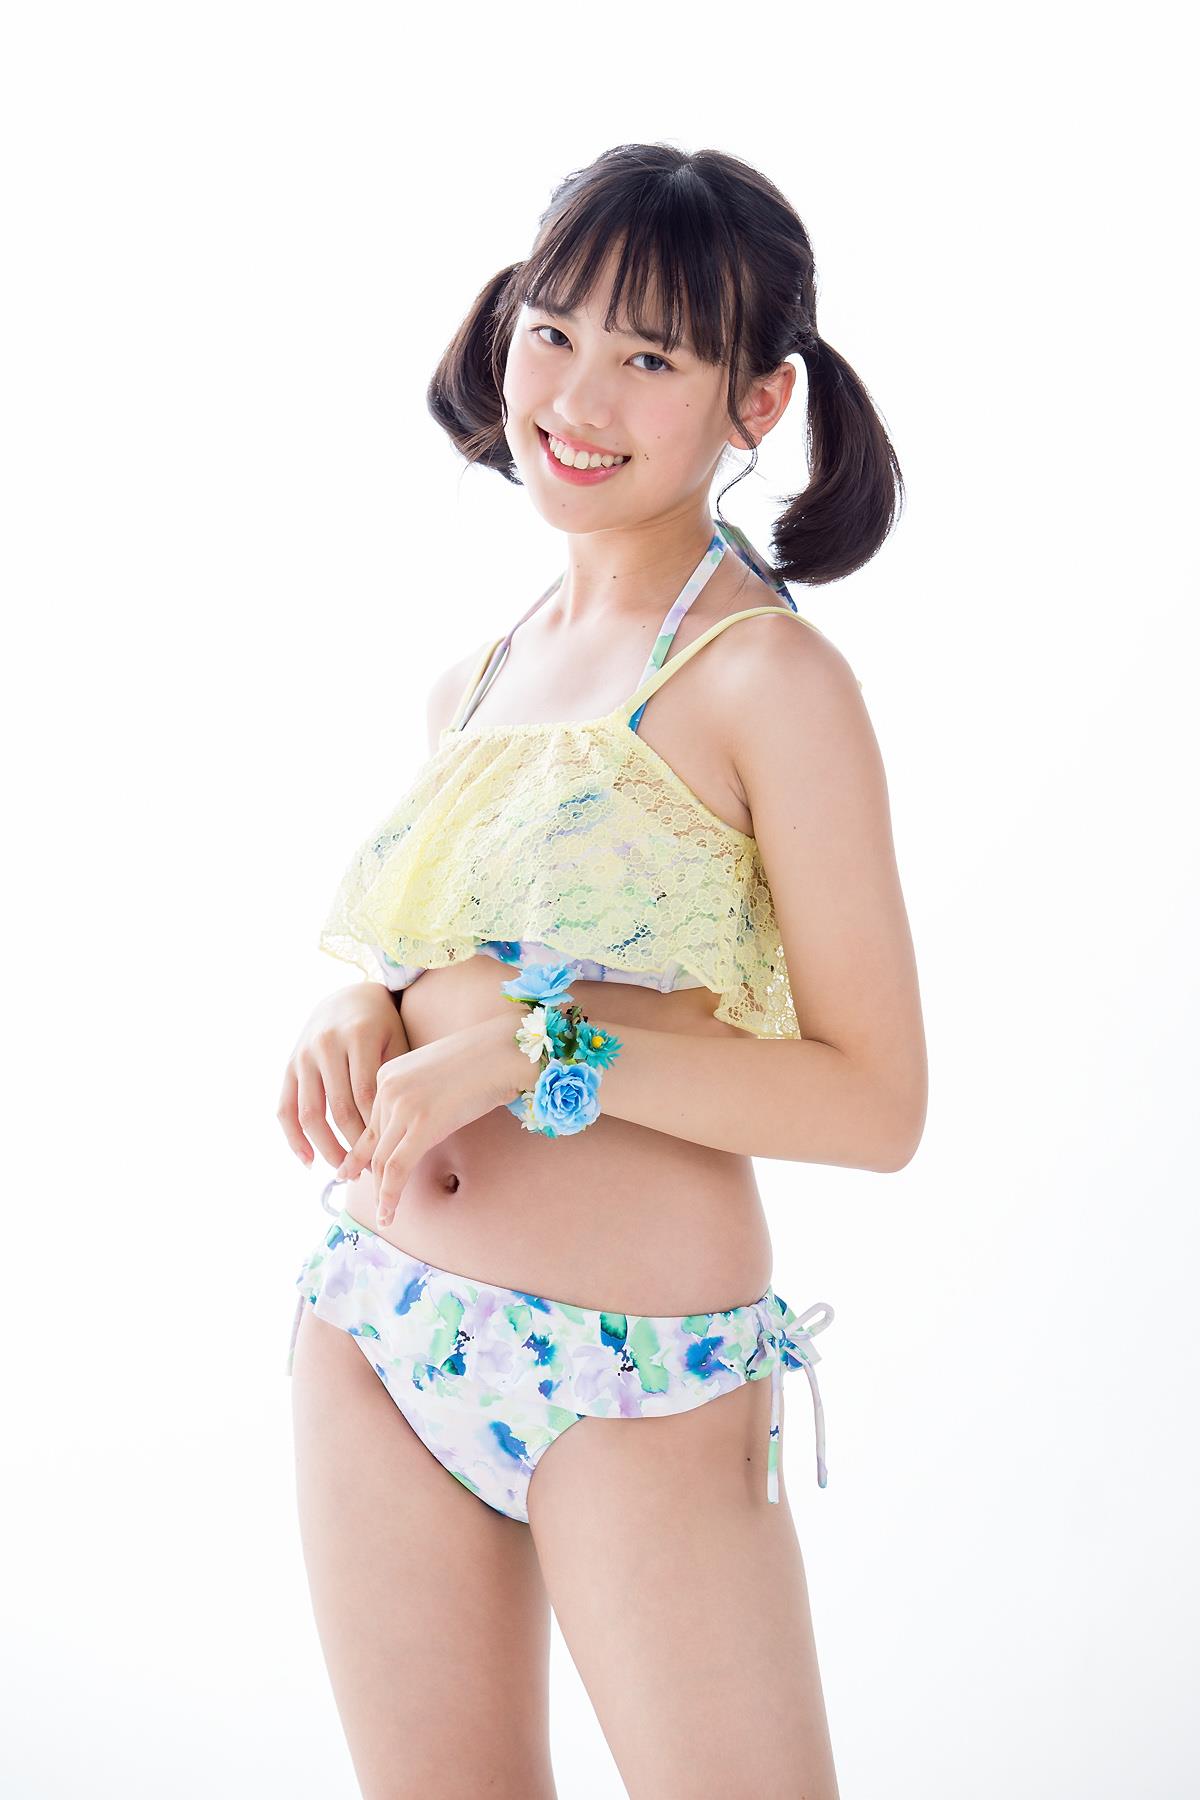 Minisuka.tv Sarina Kashiwagi 柏木さりな Premium Gallery 2.8 - 16.jpg